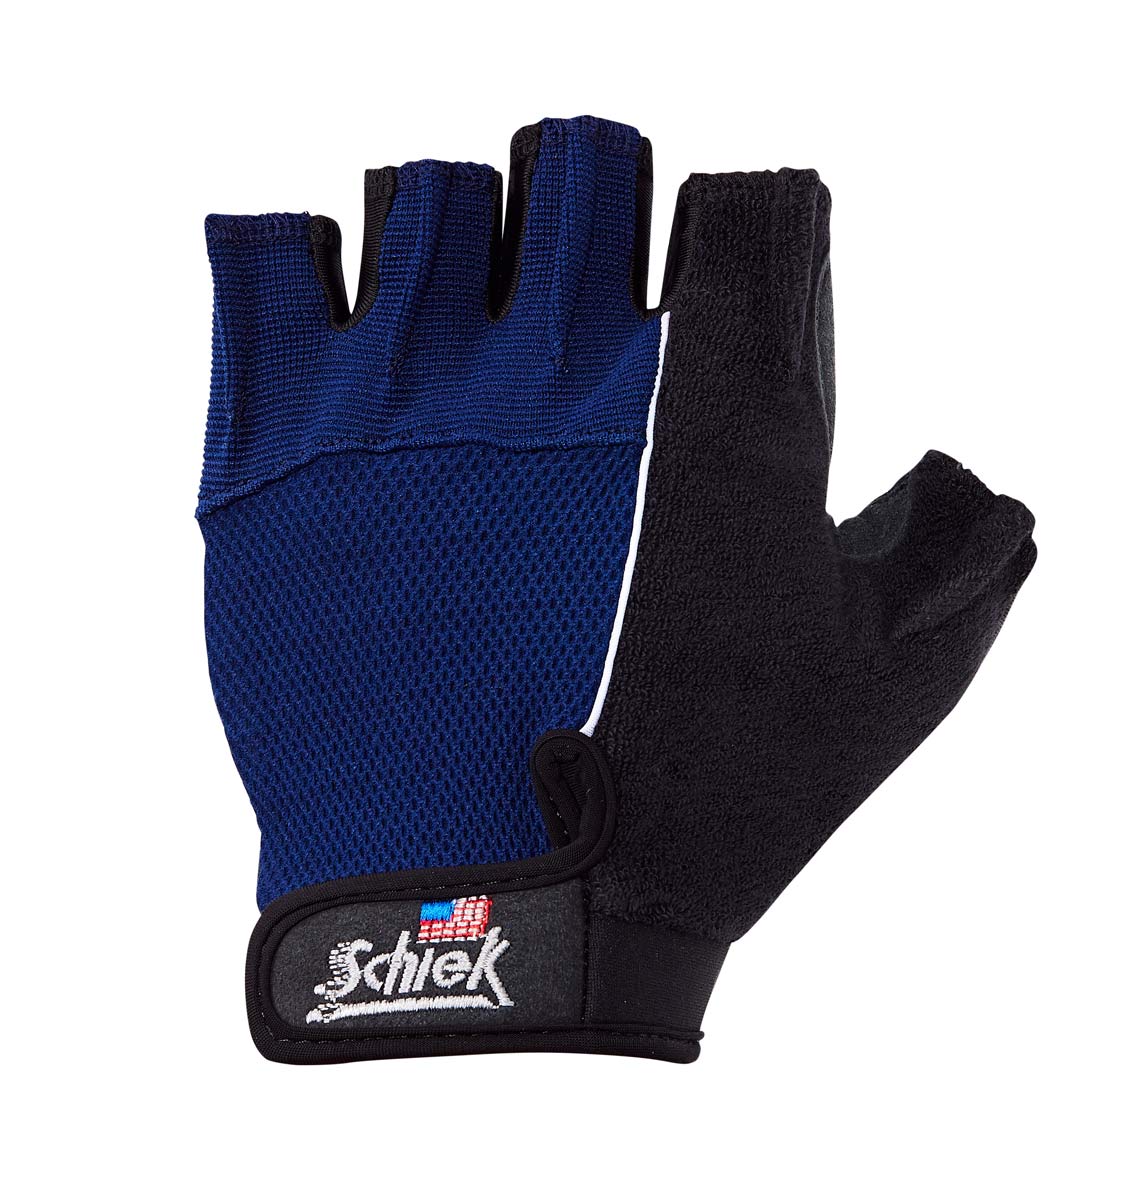 https://cdn.shopify.com/s/files/1/1548/5255/products/510-Schiek-Cross-Training-and-Fitness-Gloves-Left-Top.jpg?v=1572141201